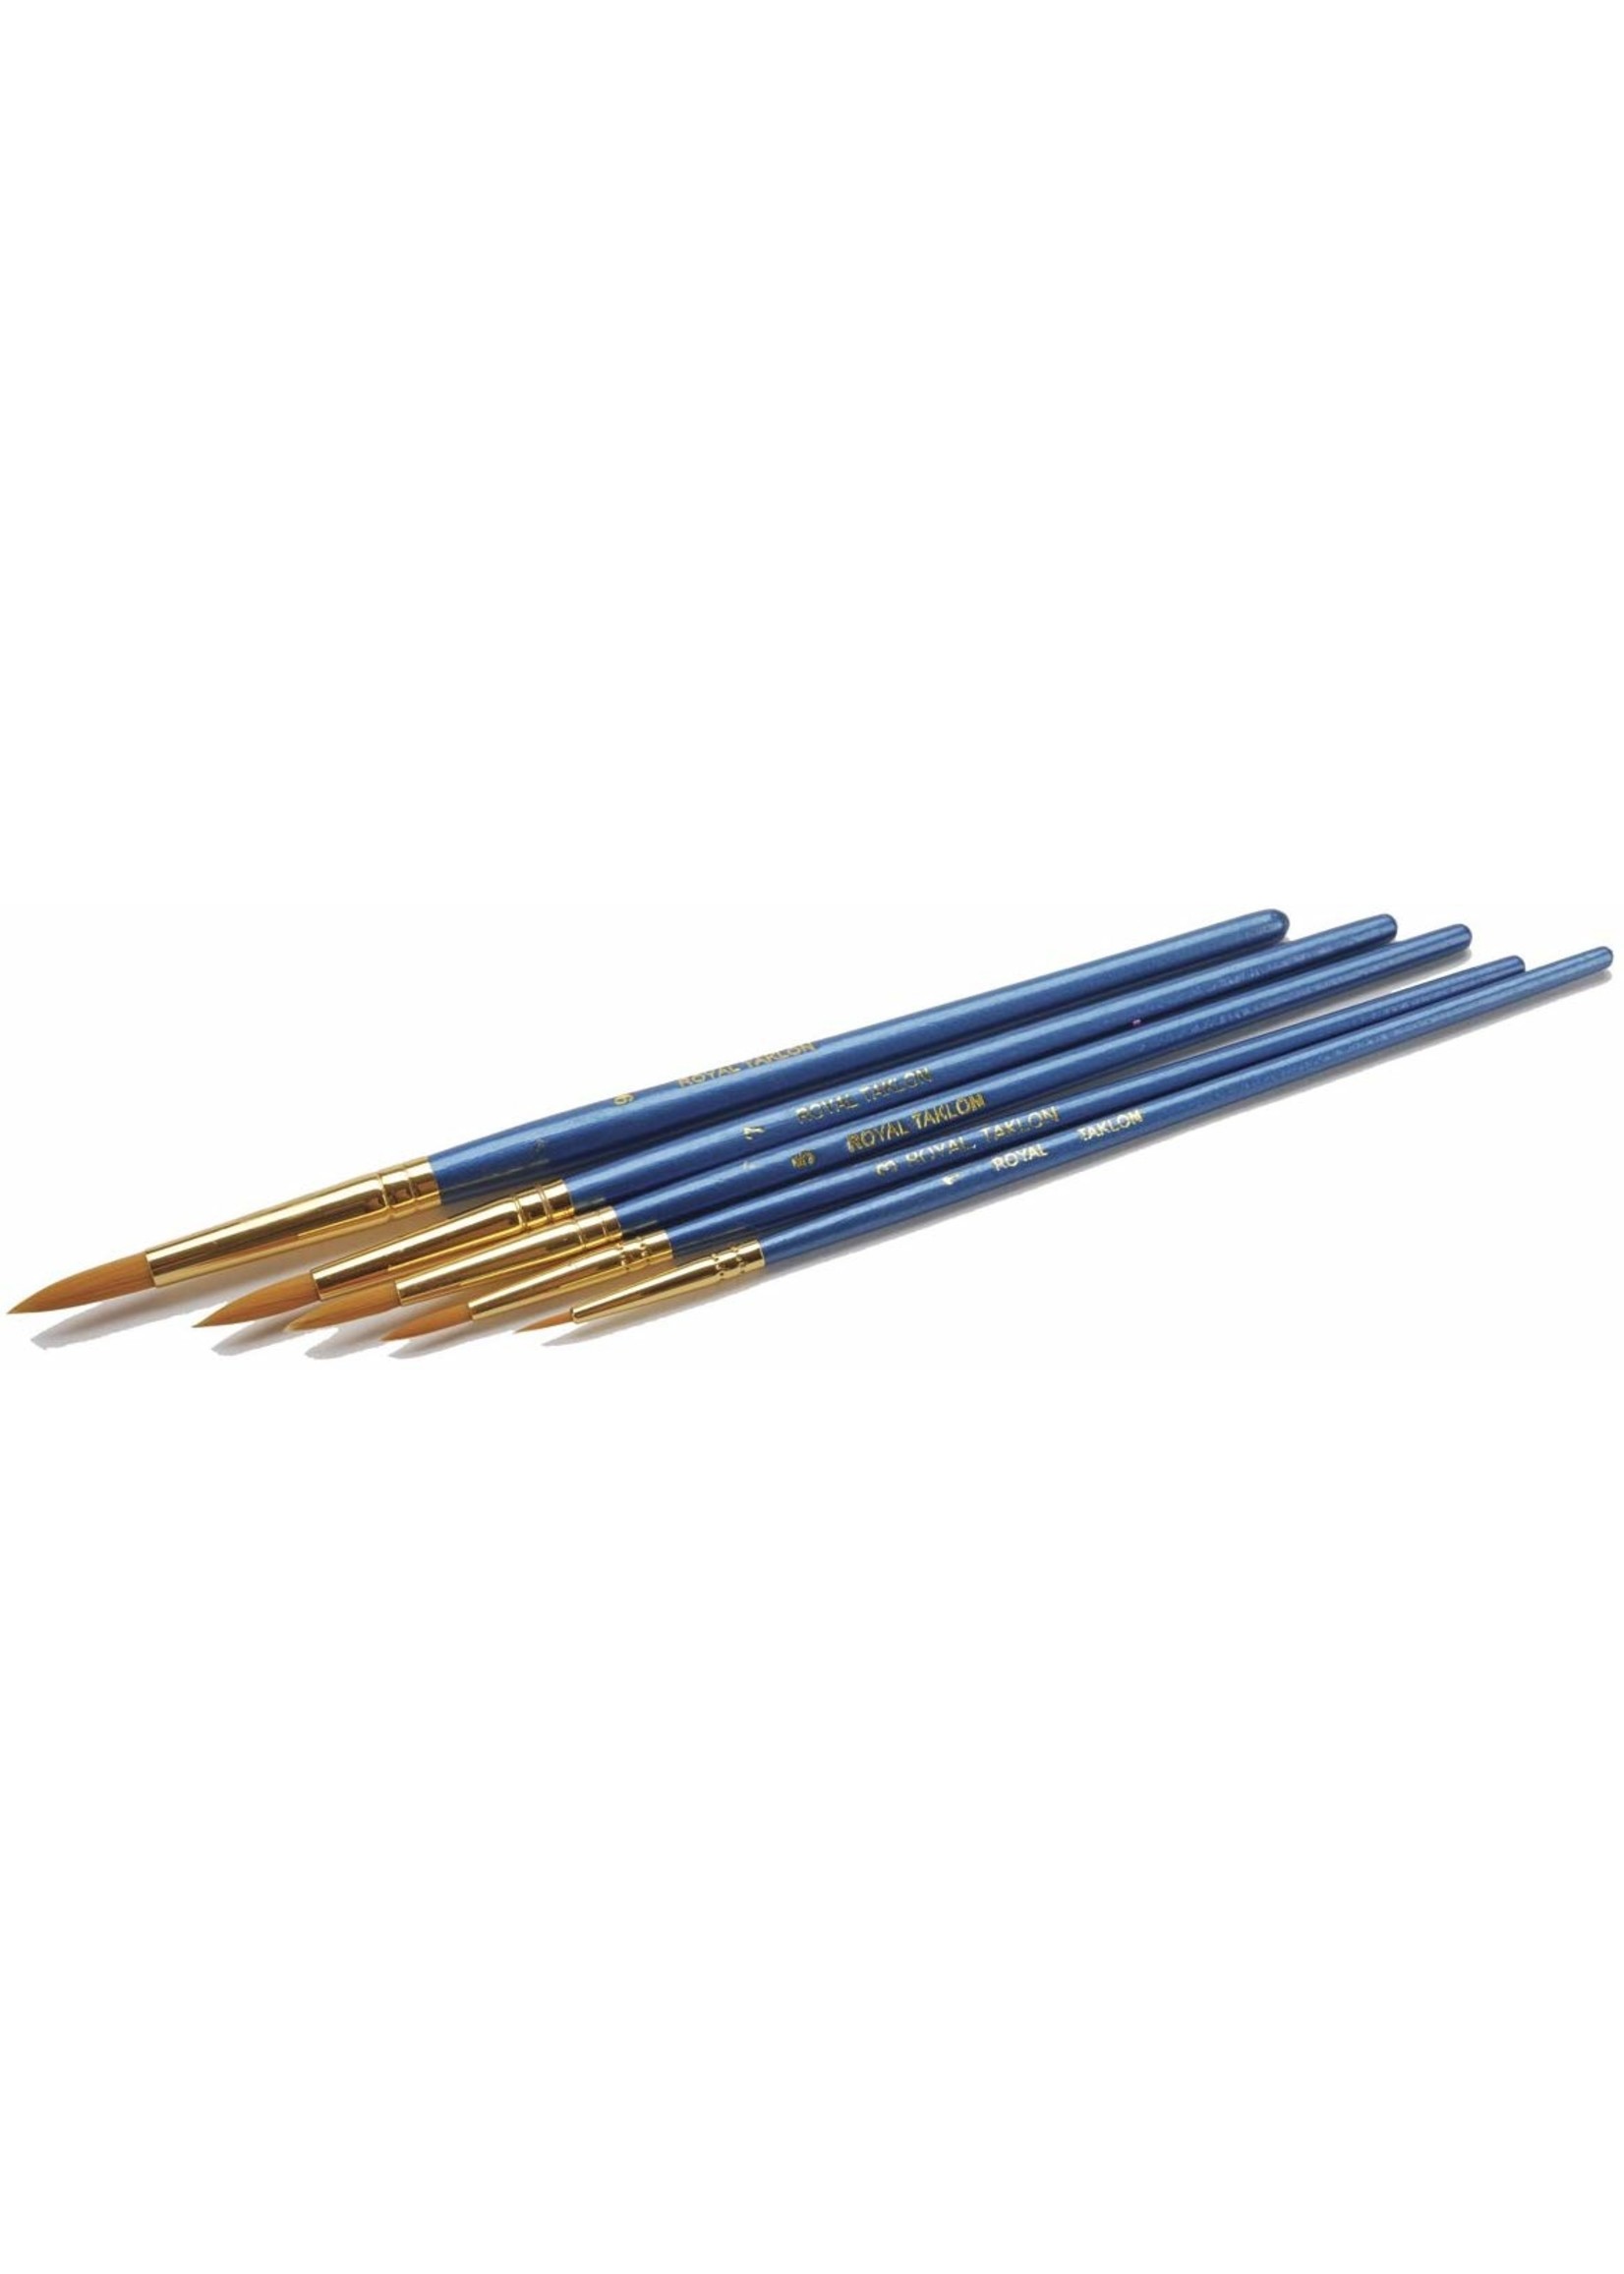 Royal Brush Manufacturing TK-M - Brush Set Gold Taklon 5-Pack - Pointed Rounds